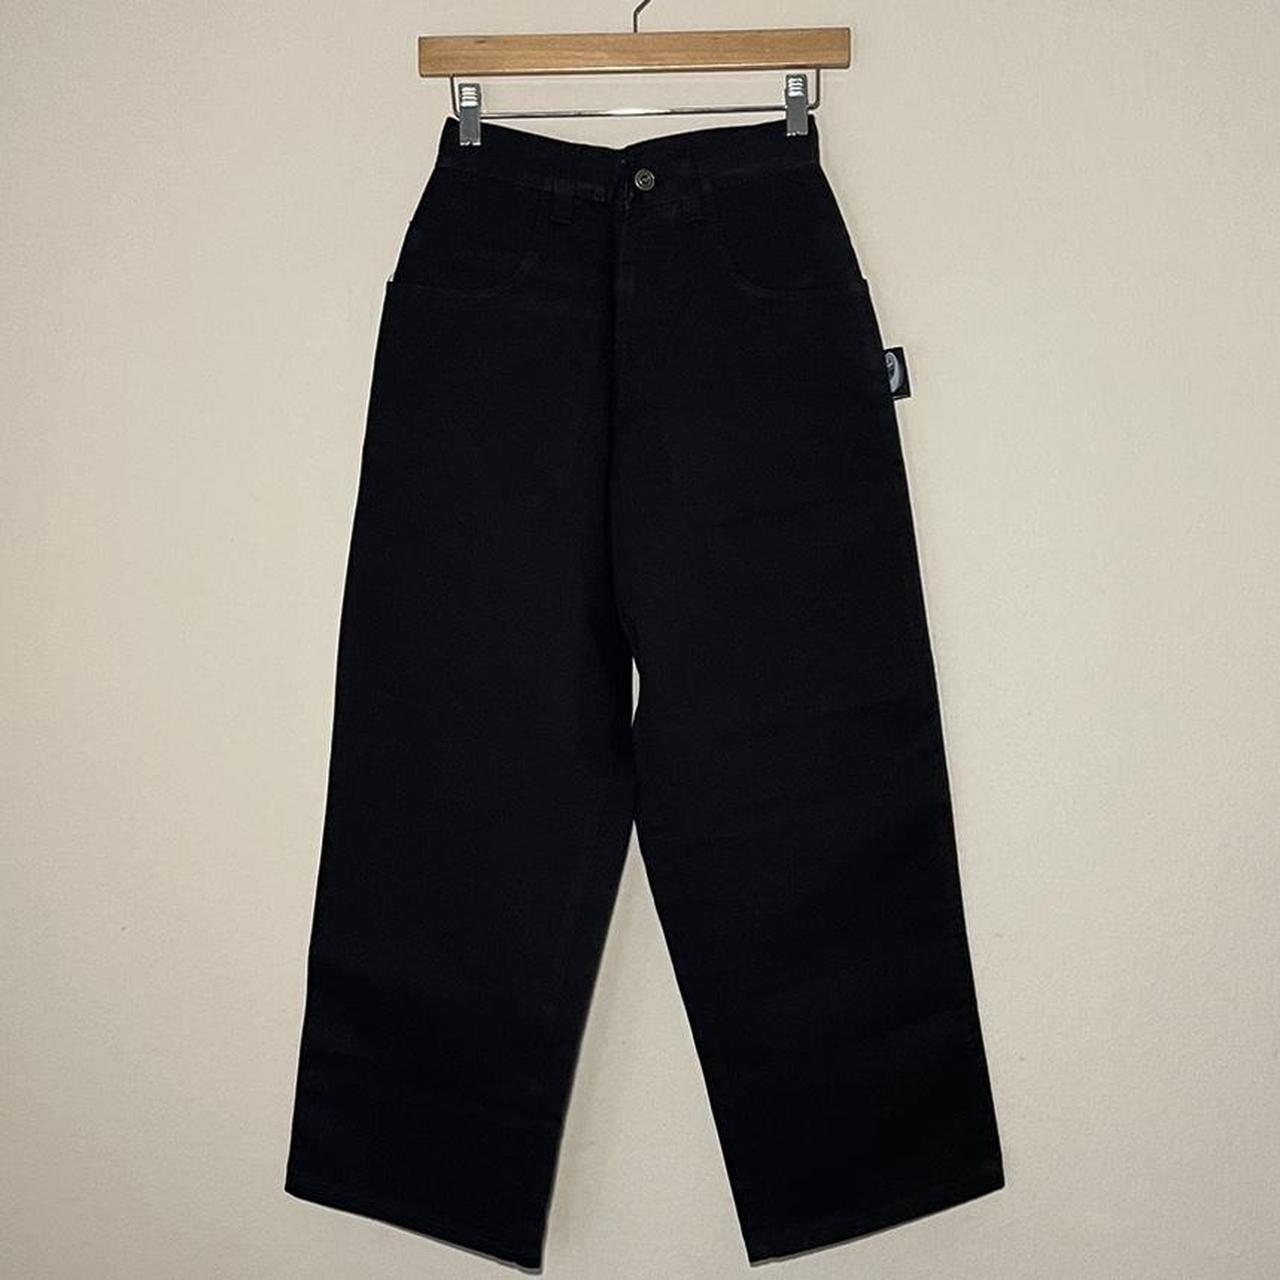 Vintage Interstate Black Baggy Jeans New without... - Depop